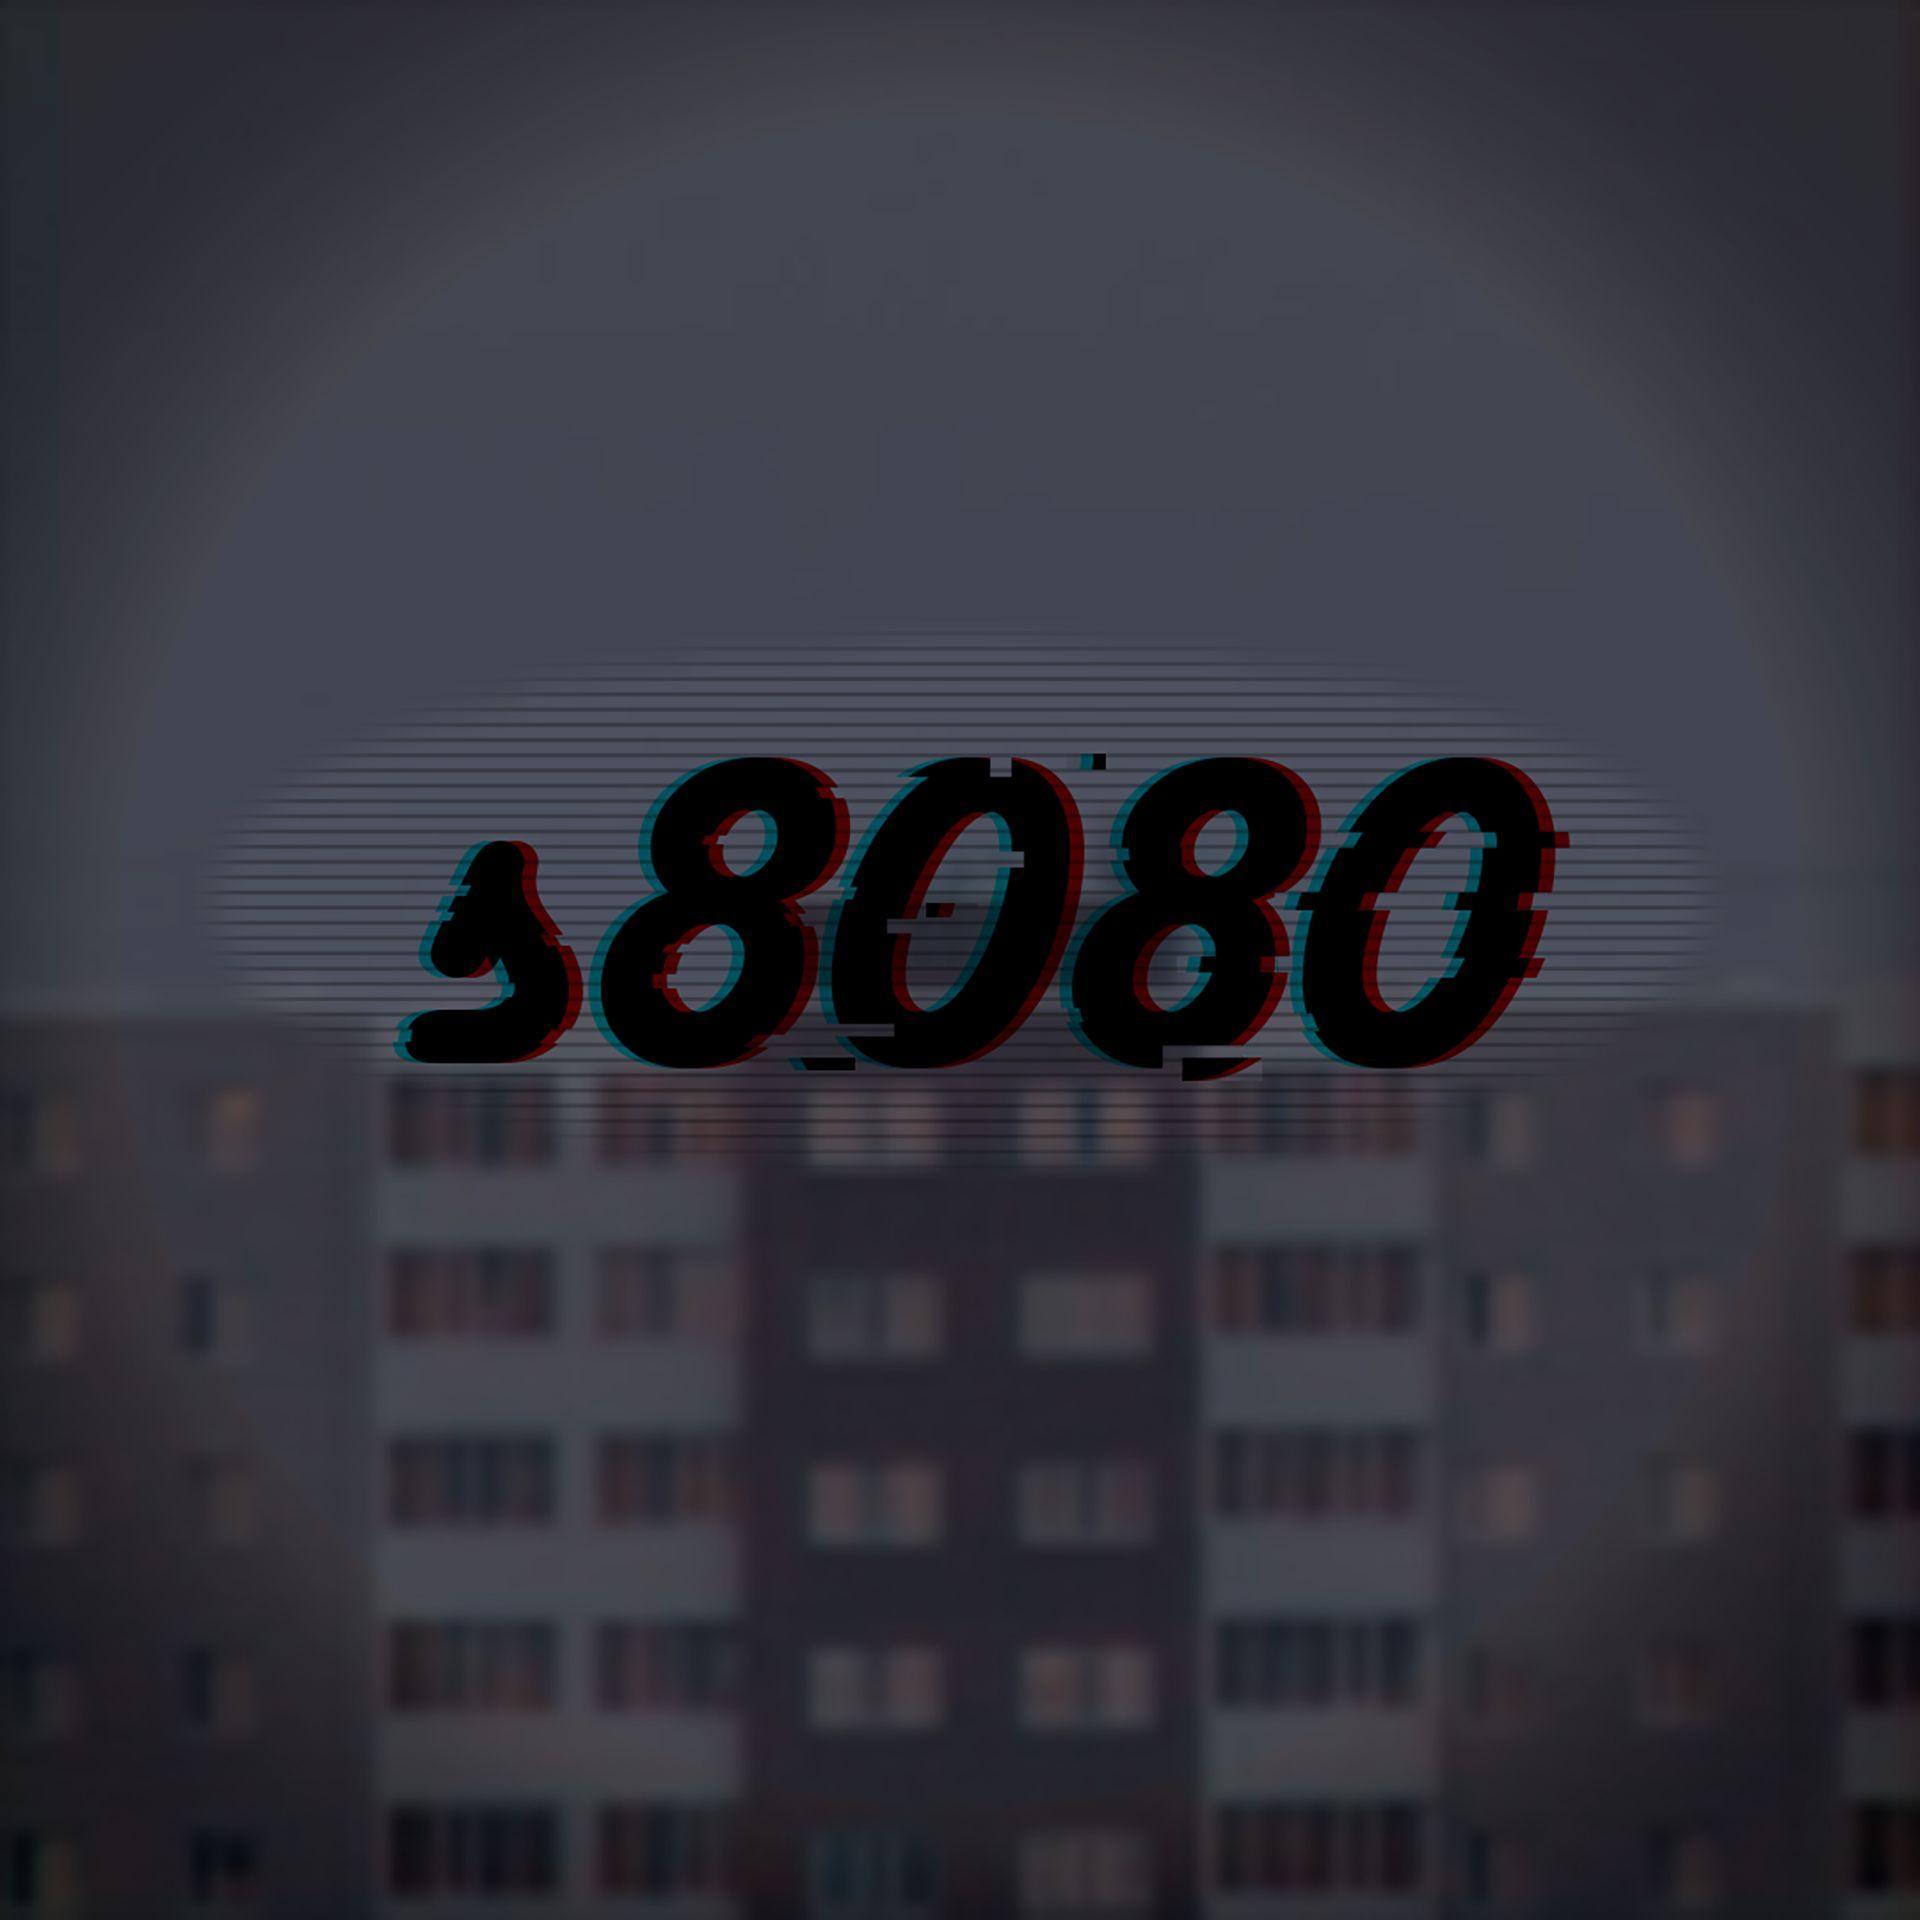 Player s8080 avatar